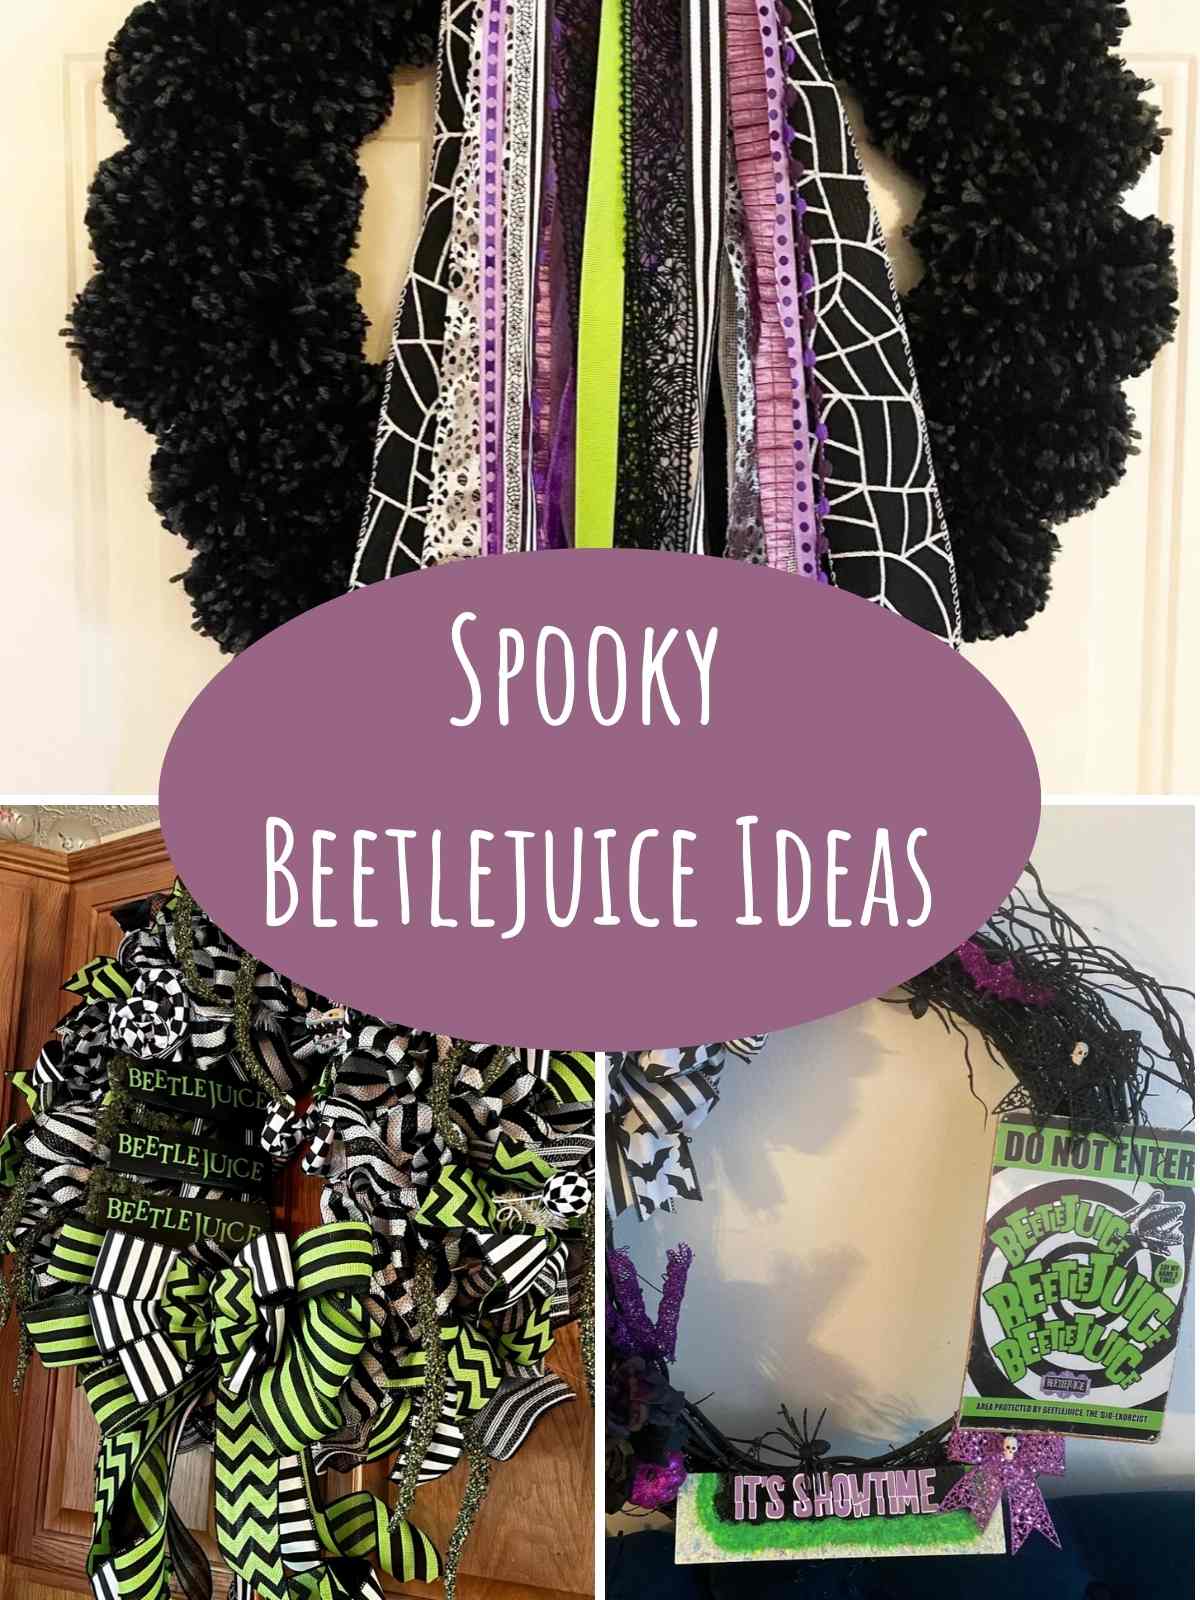 Spooky Beetlejuice Ideas